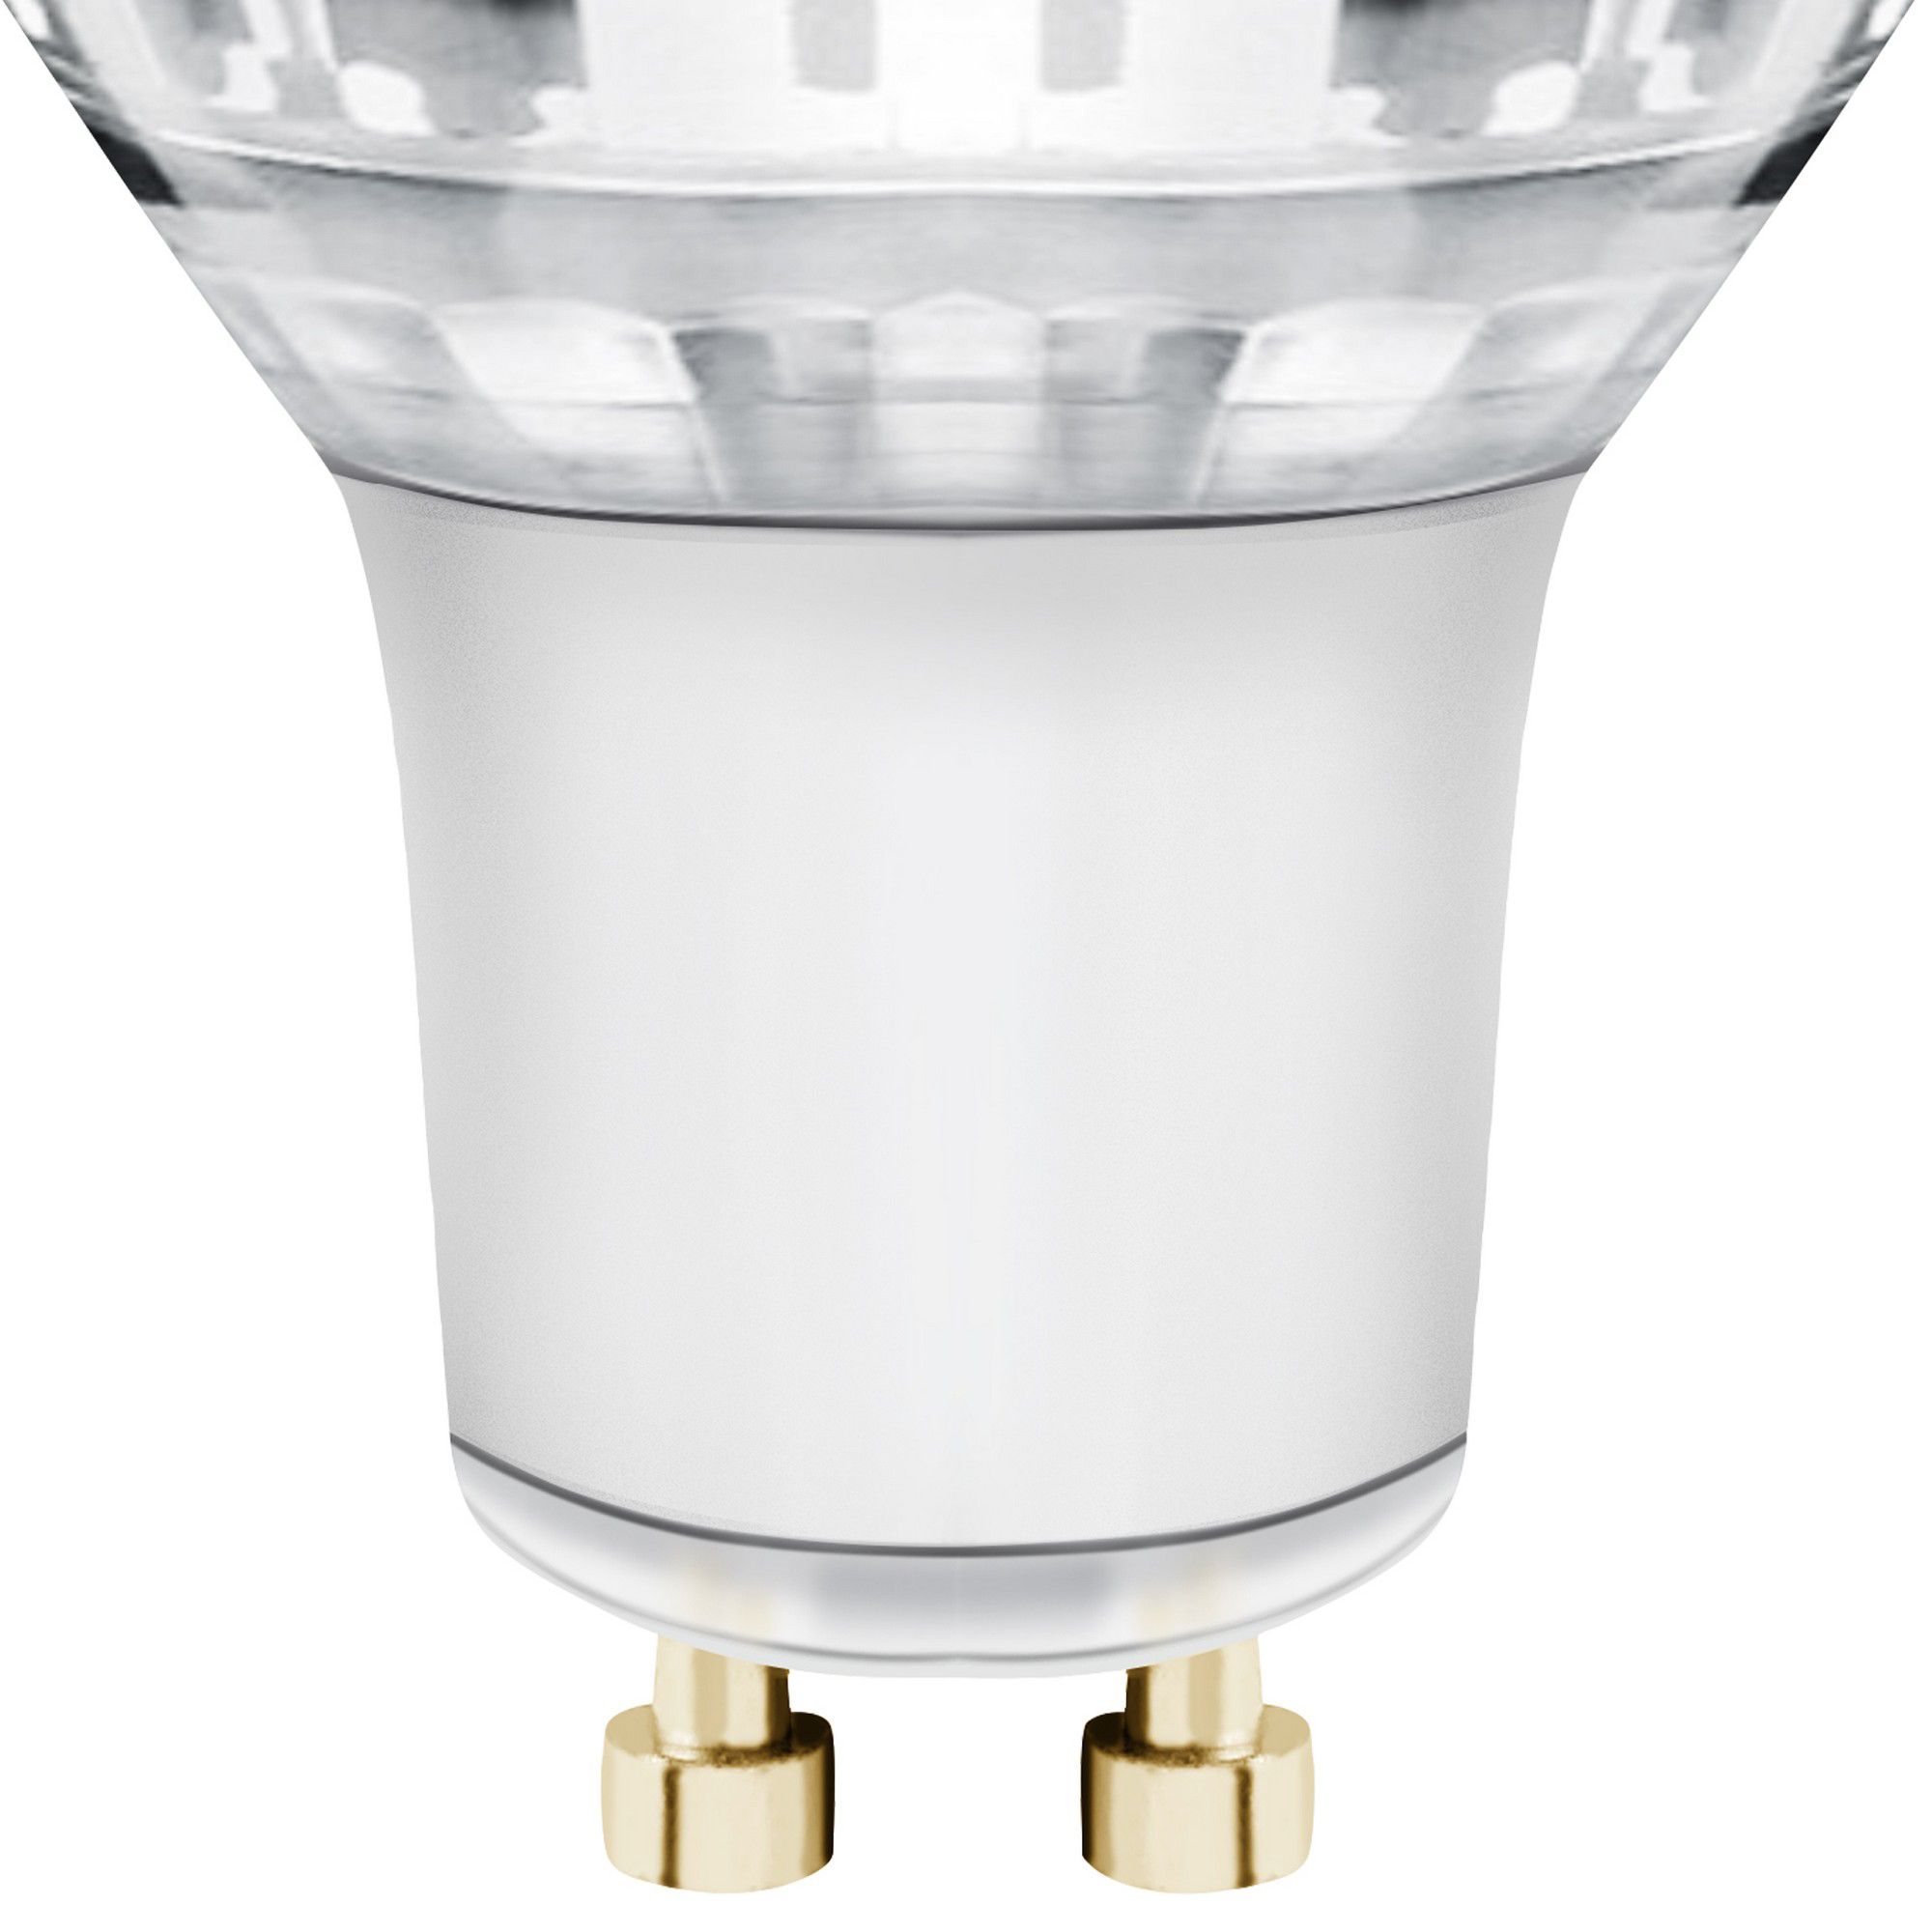 Diall GU10 3.6W 345lm 36° Clear Reflector spot Neutral white LED Light bulb